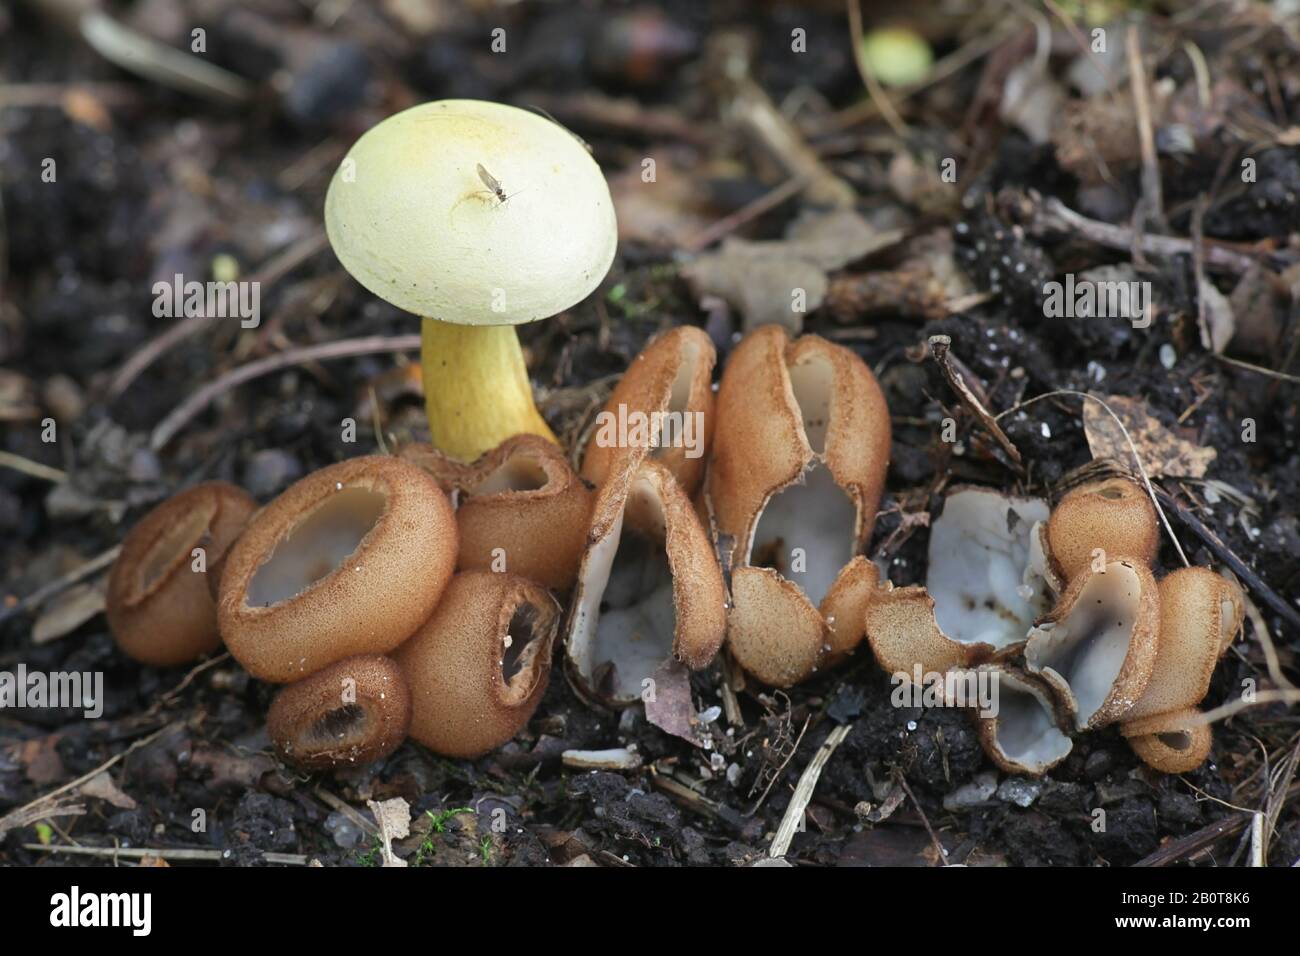 Sulphur knight, Tricholoma sulphureum,  surrounded by glazed cup fungi, Humaria hemisphaerica, wild mushrooms from Finland Stock Photo